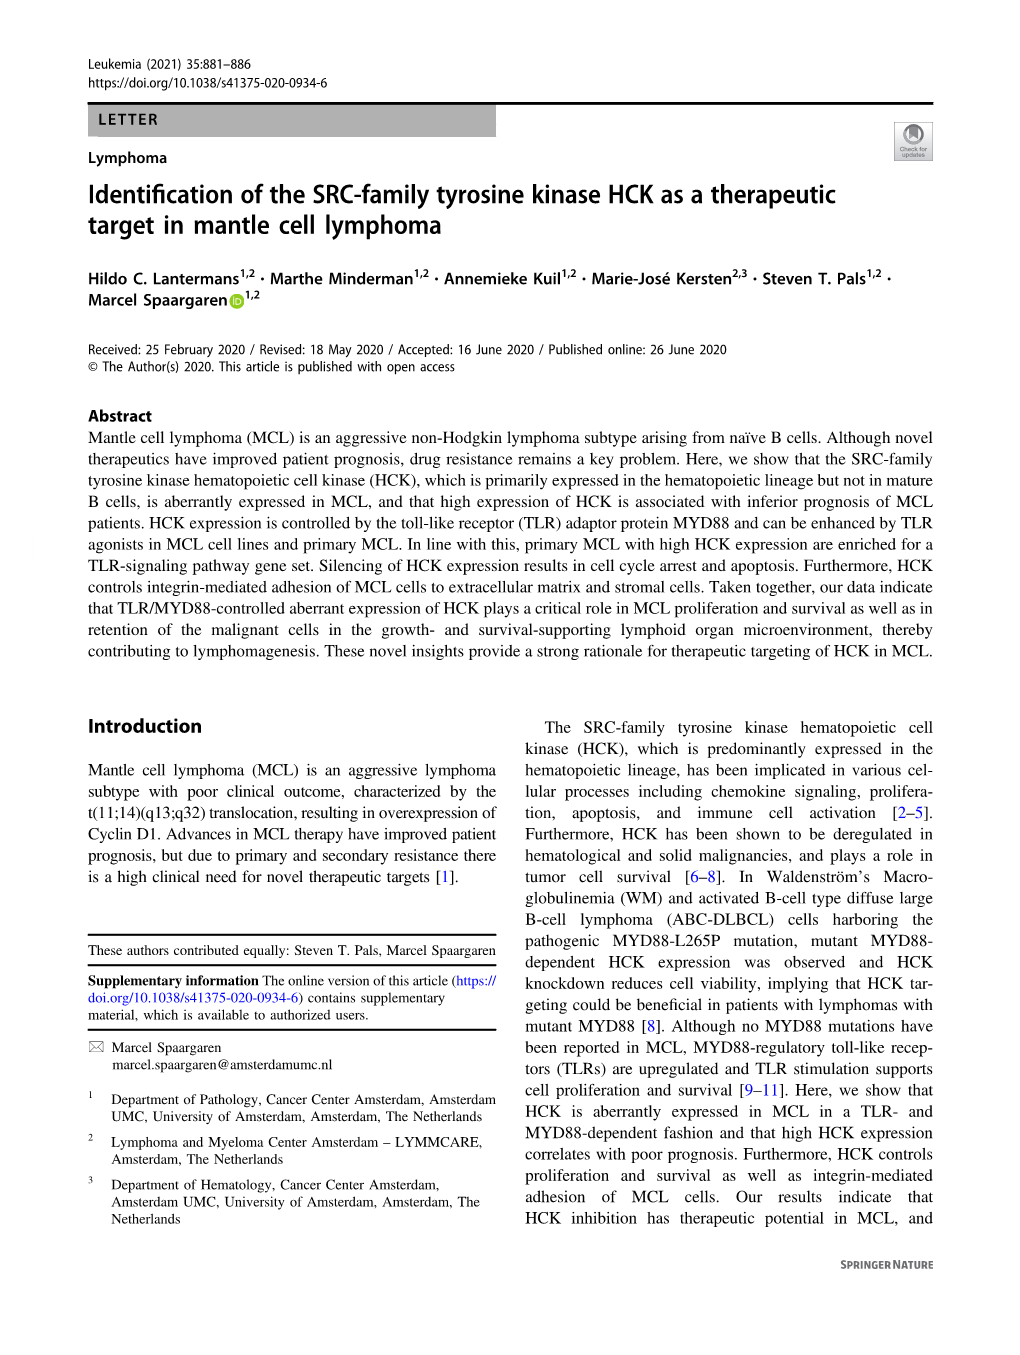 Identification of the SRC-Family Tyrosine Kinase HCK As A